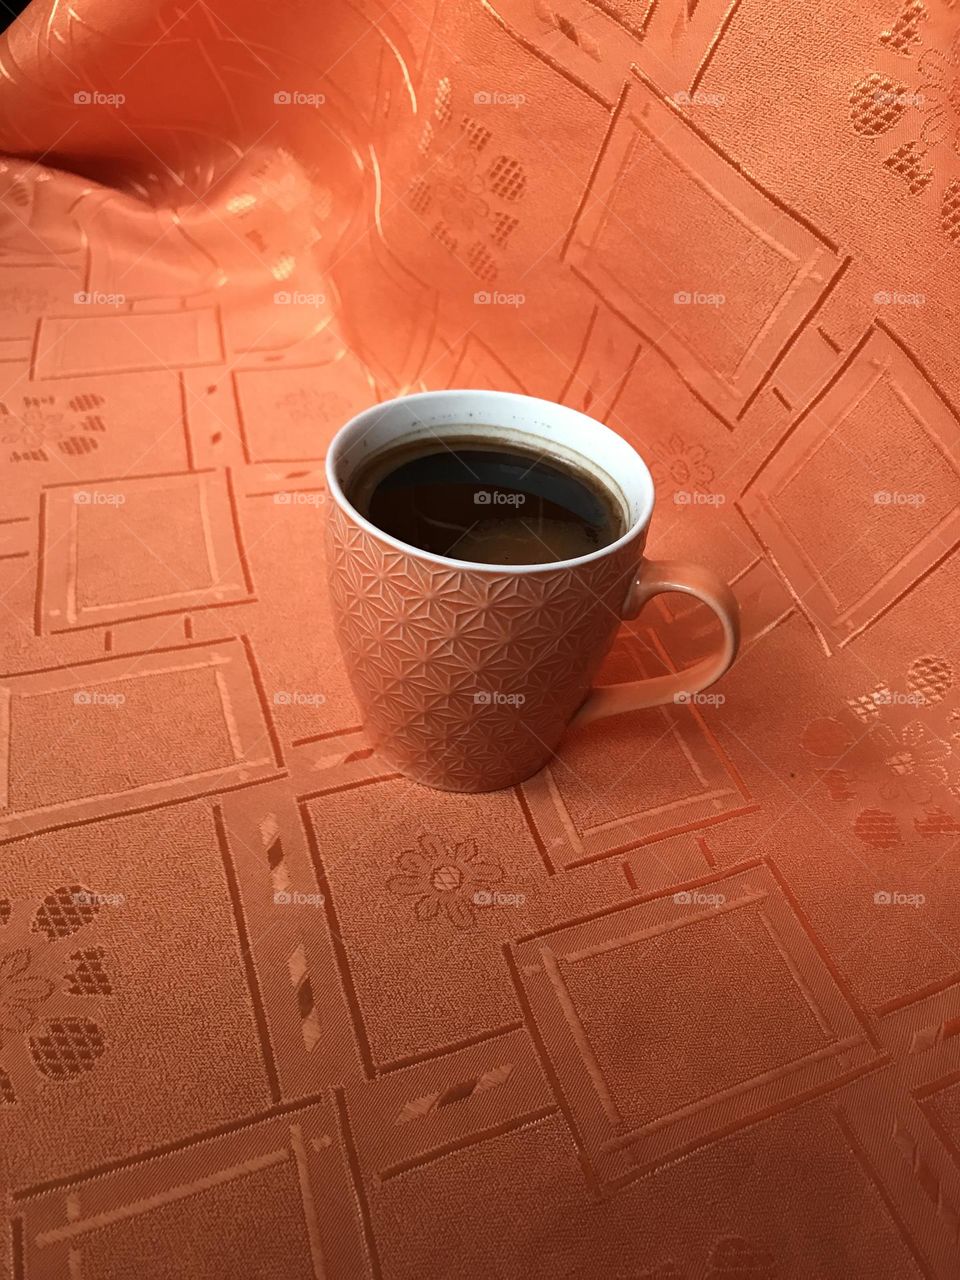 An orange cup of coffee